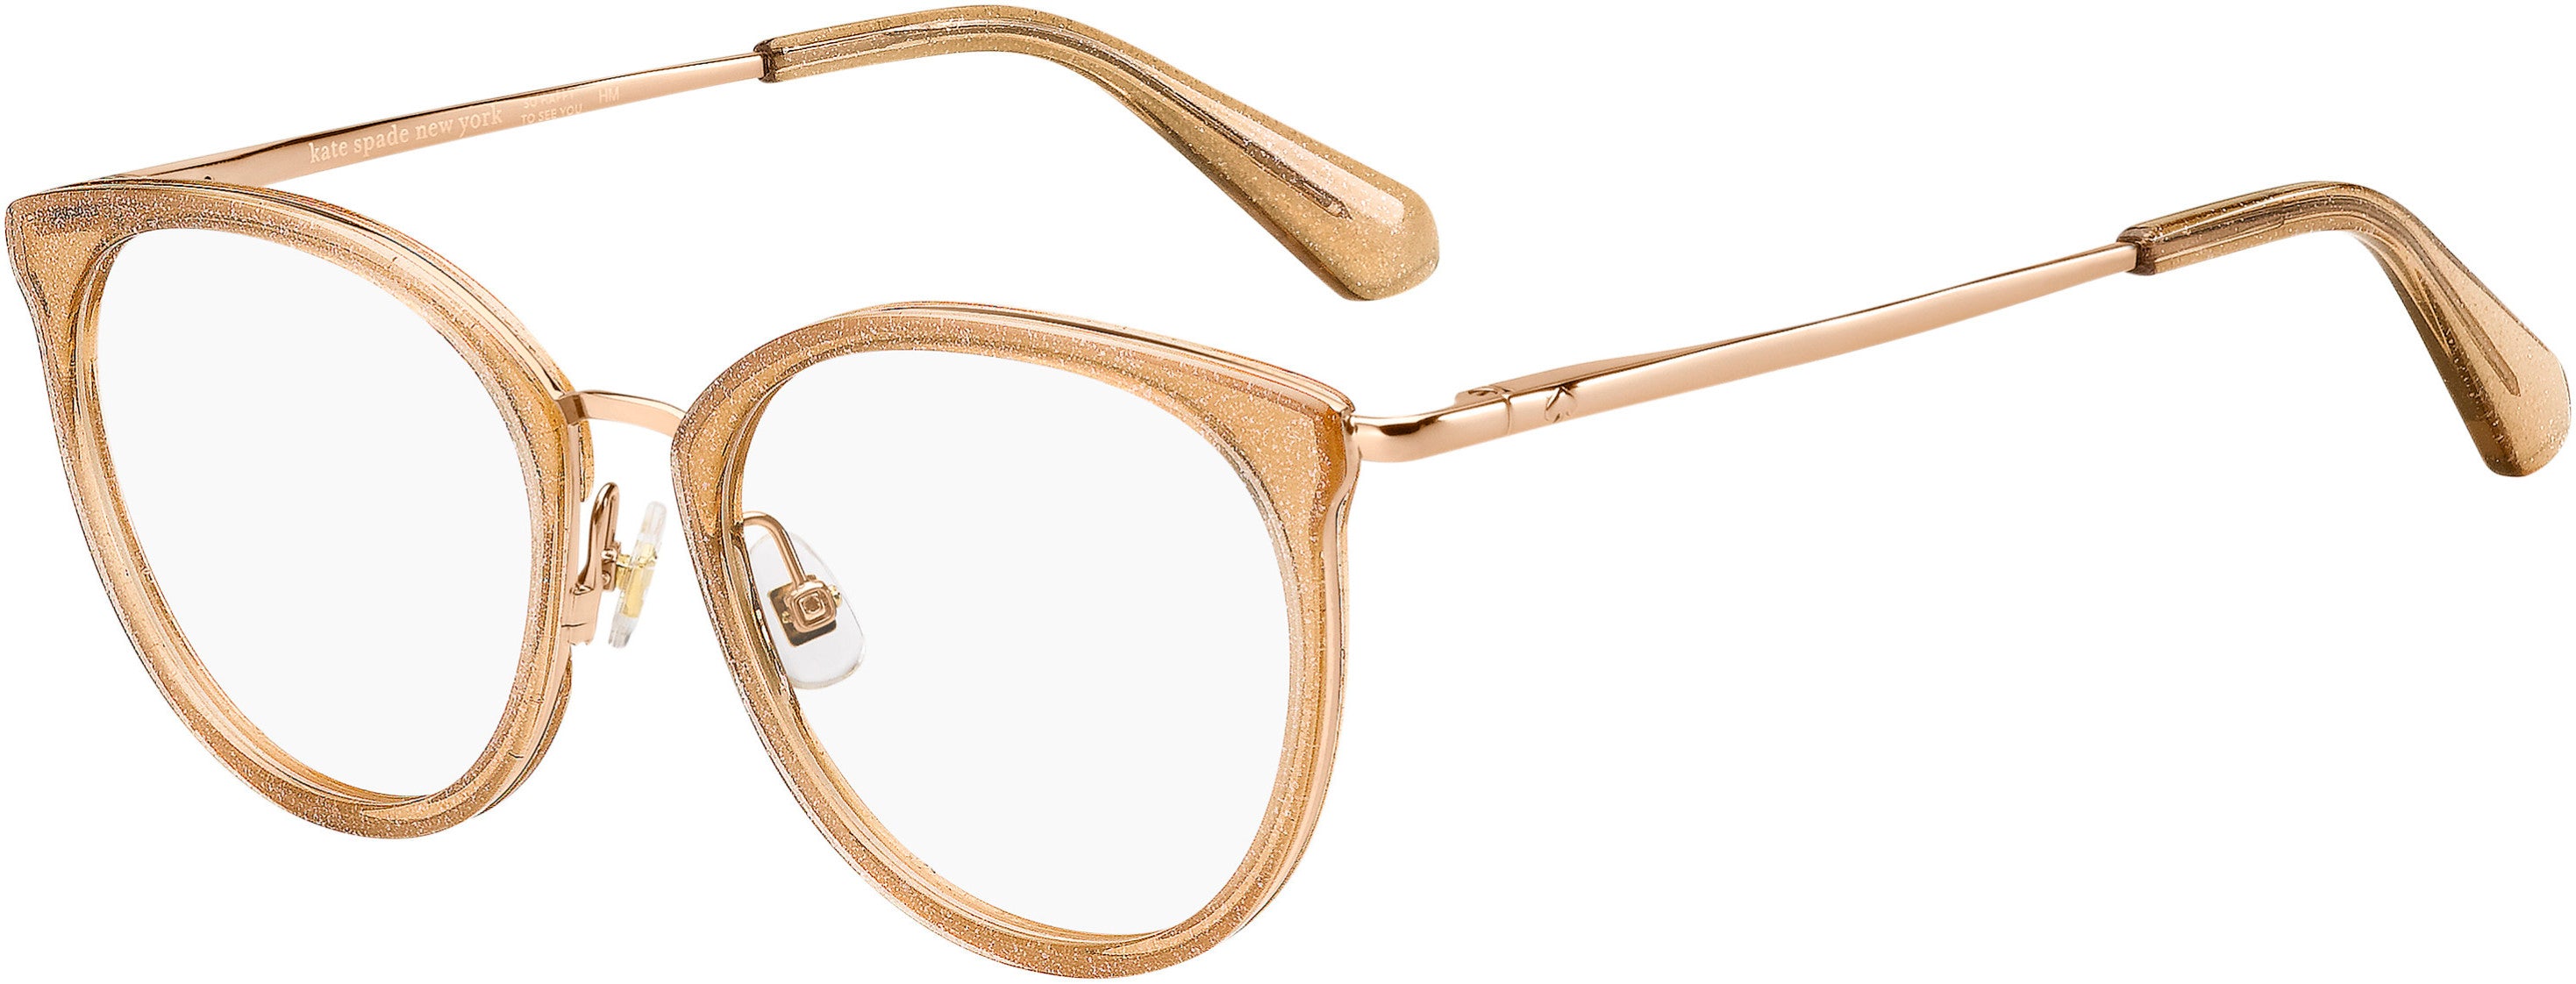 Kate Spade Eliana/G Oval Modified Eyeglasses 0000-0000  Rose Gold (00 Demo Lens)